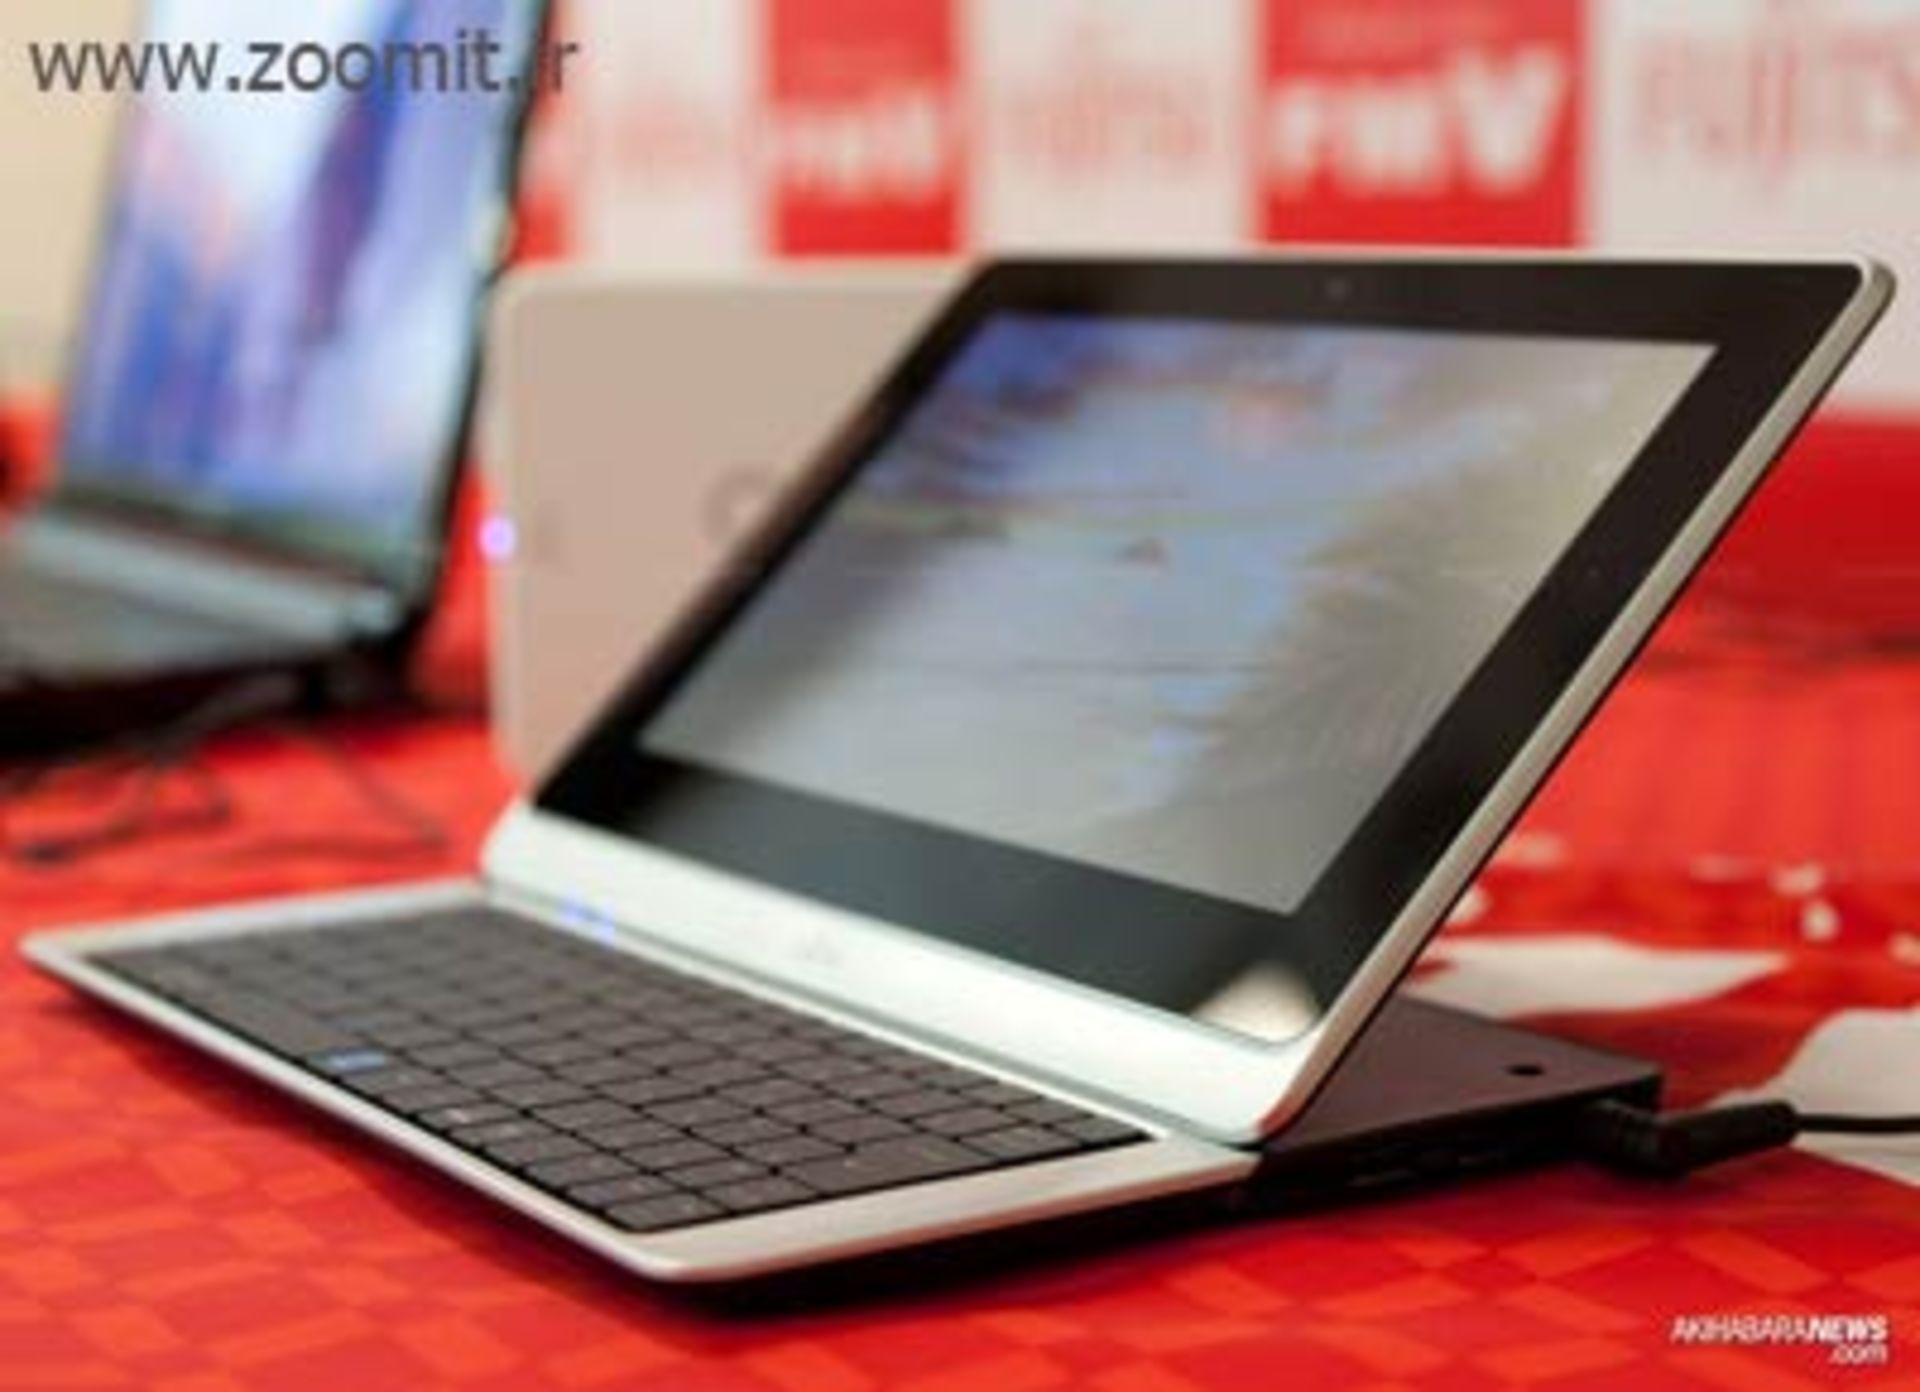 Fujitsu-THD40-Slide-out-keyboard-tablet-3